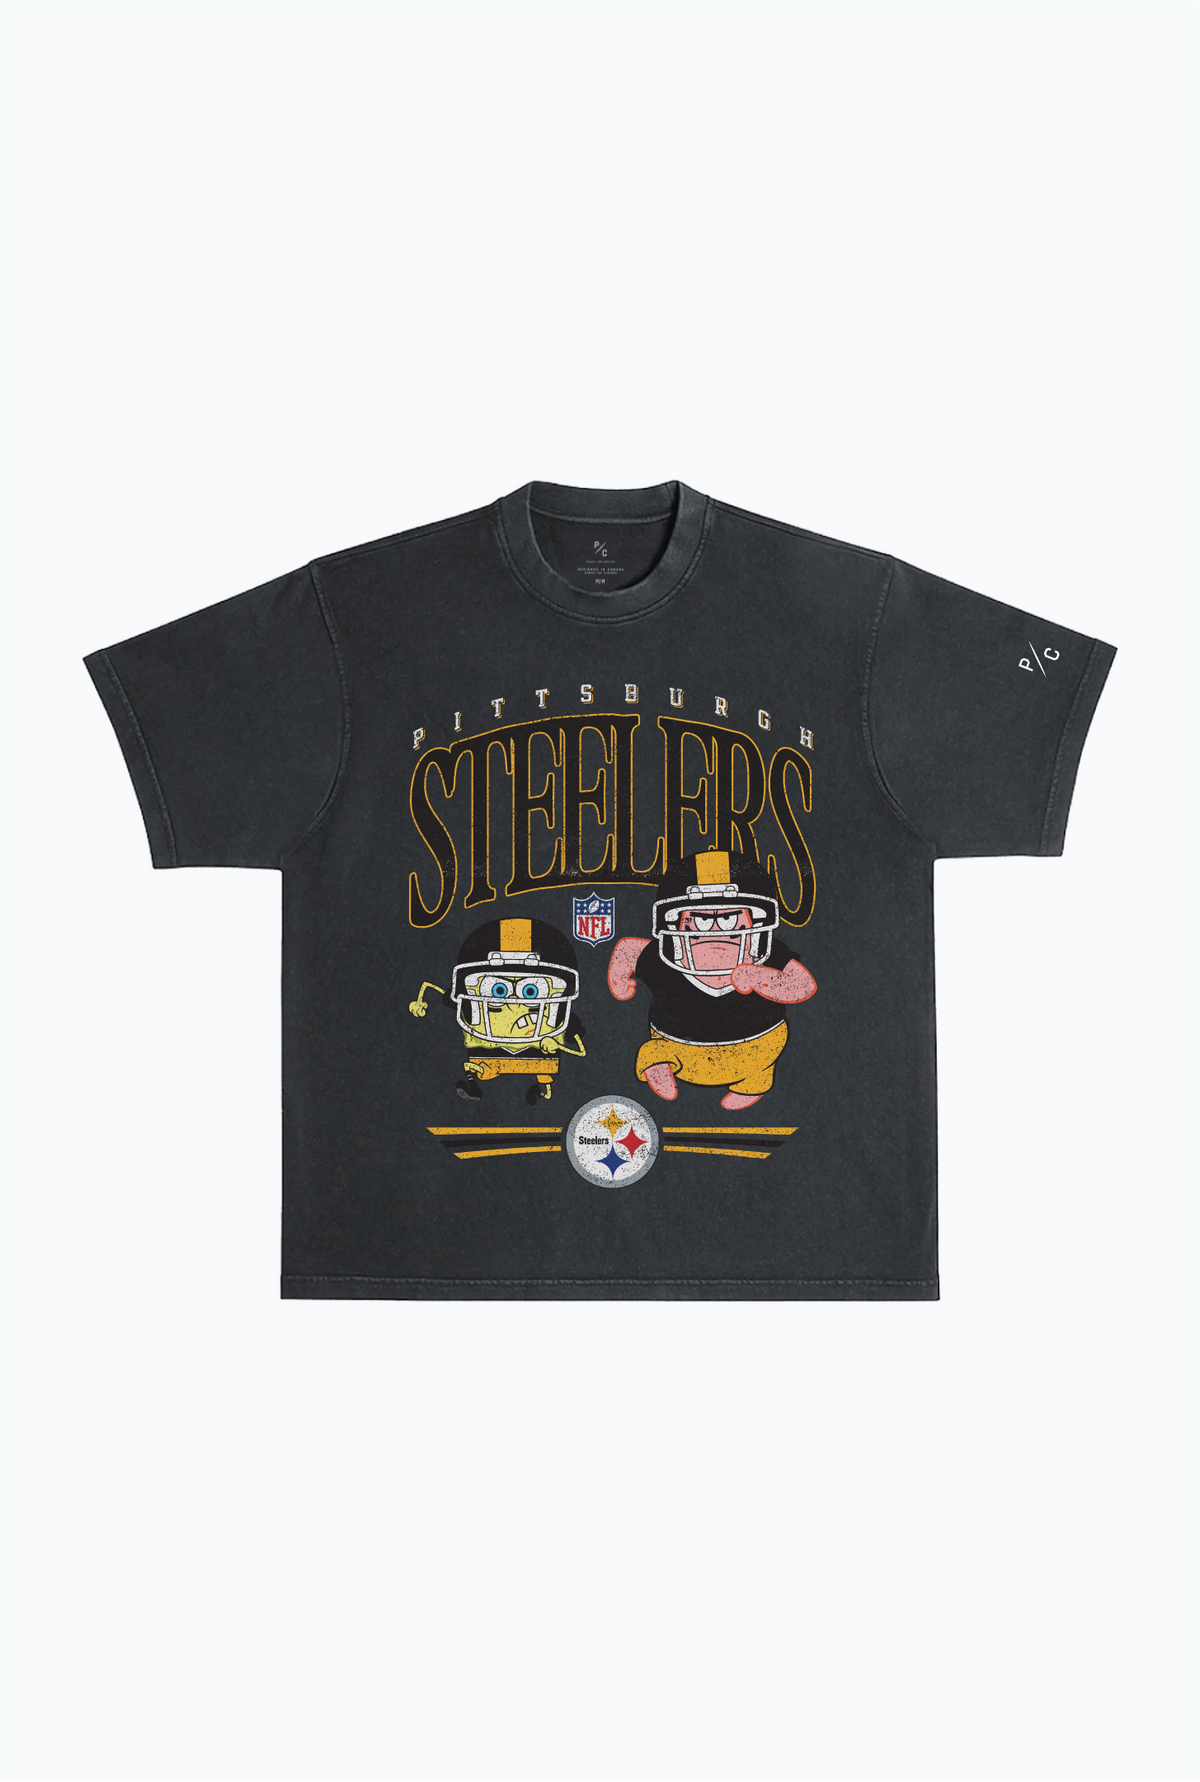 Spongebob & Patrick Rush Heavy Pigment Dye T-Shirt - Pittsburgh Steelers